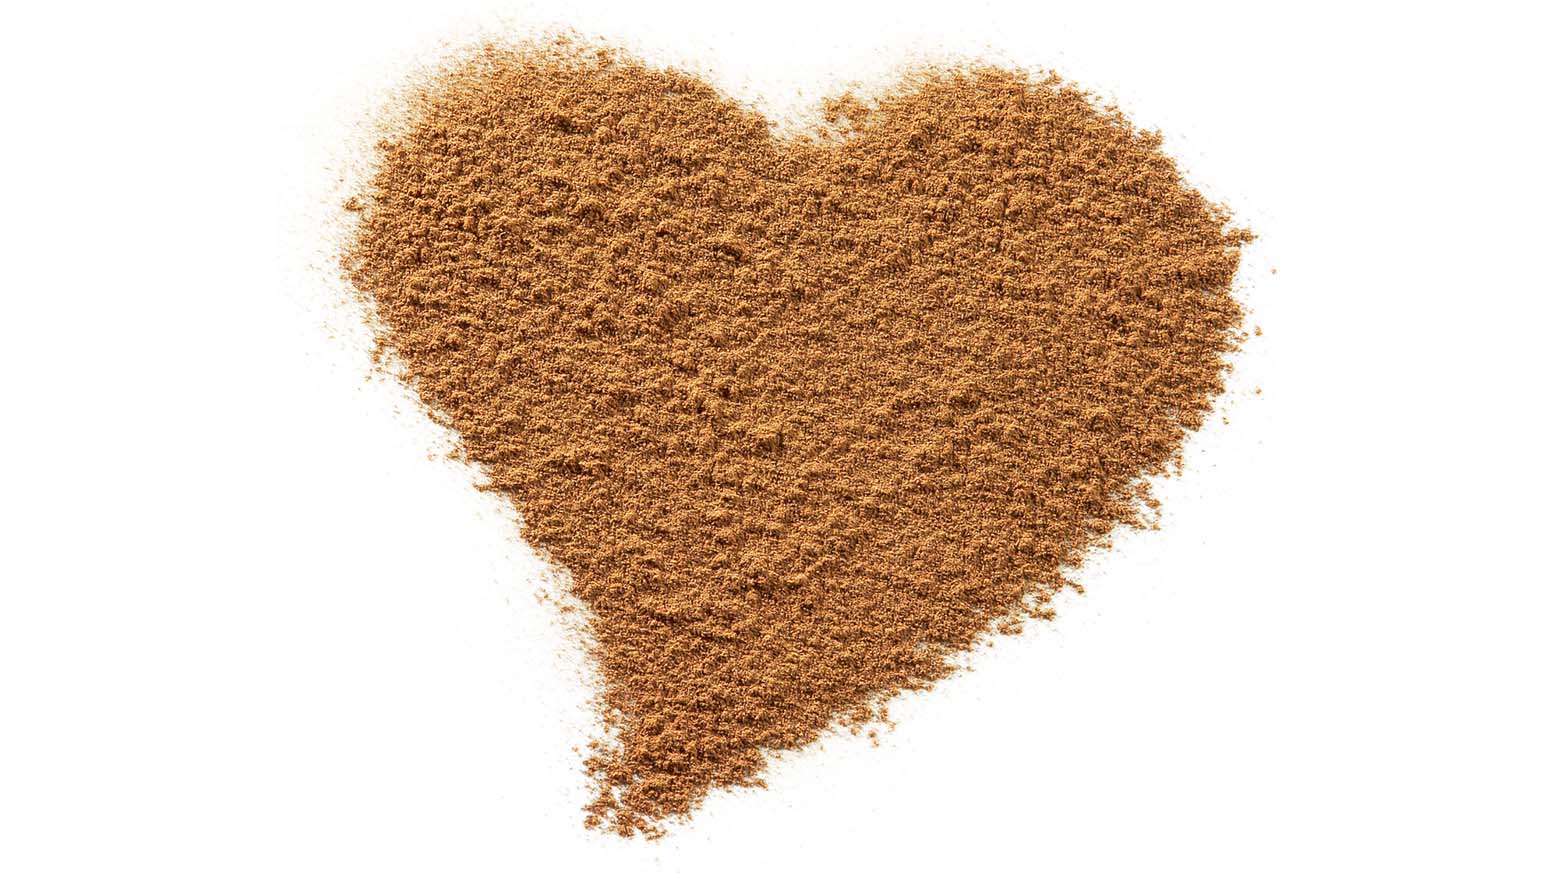 Cinnamon in the shape of a heart